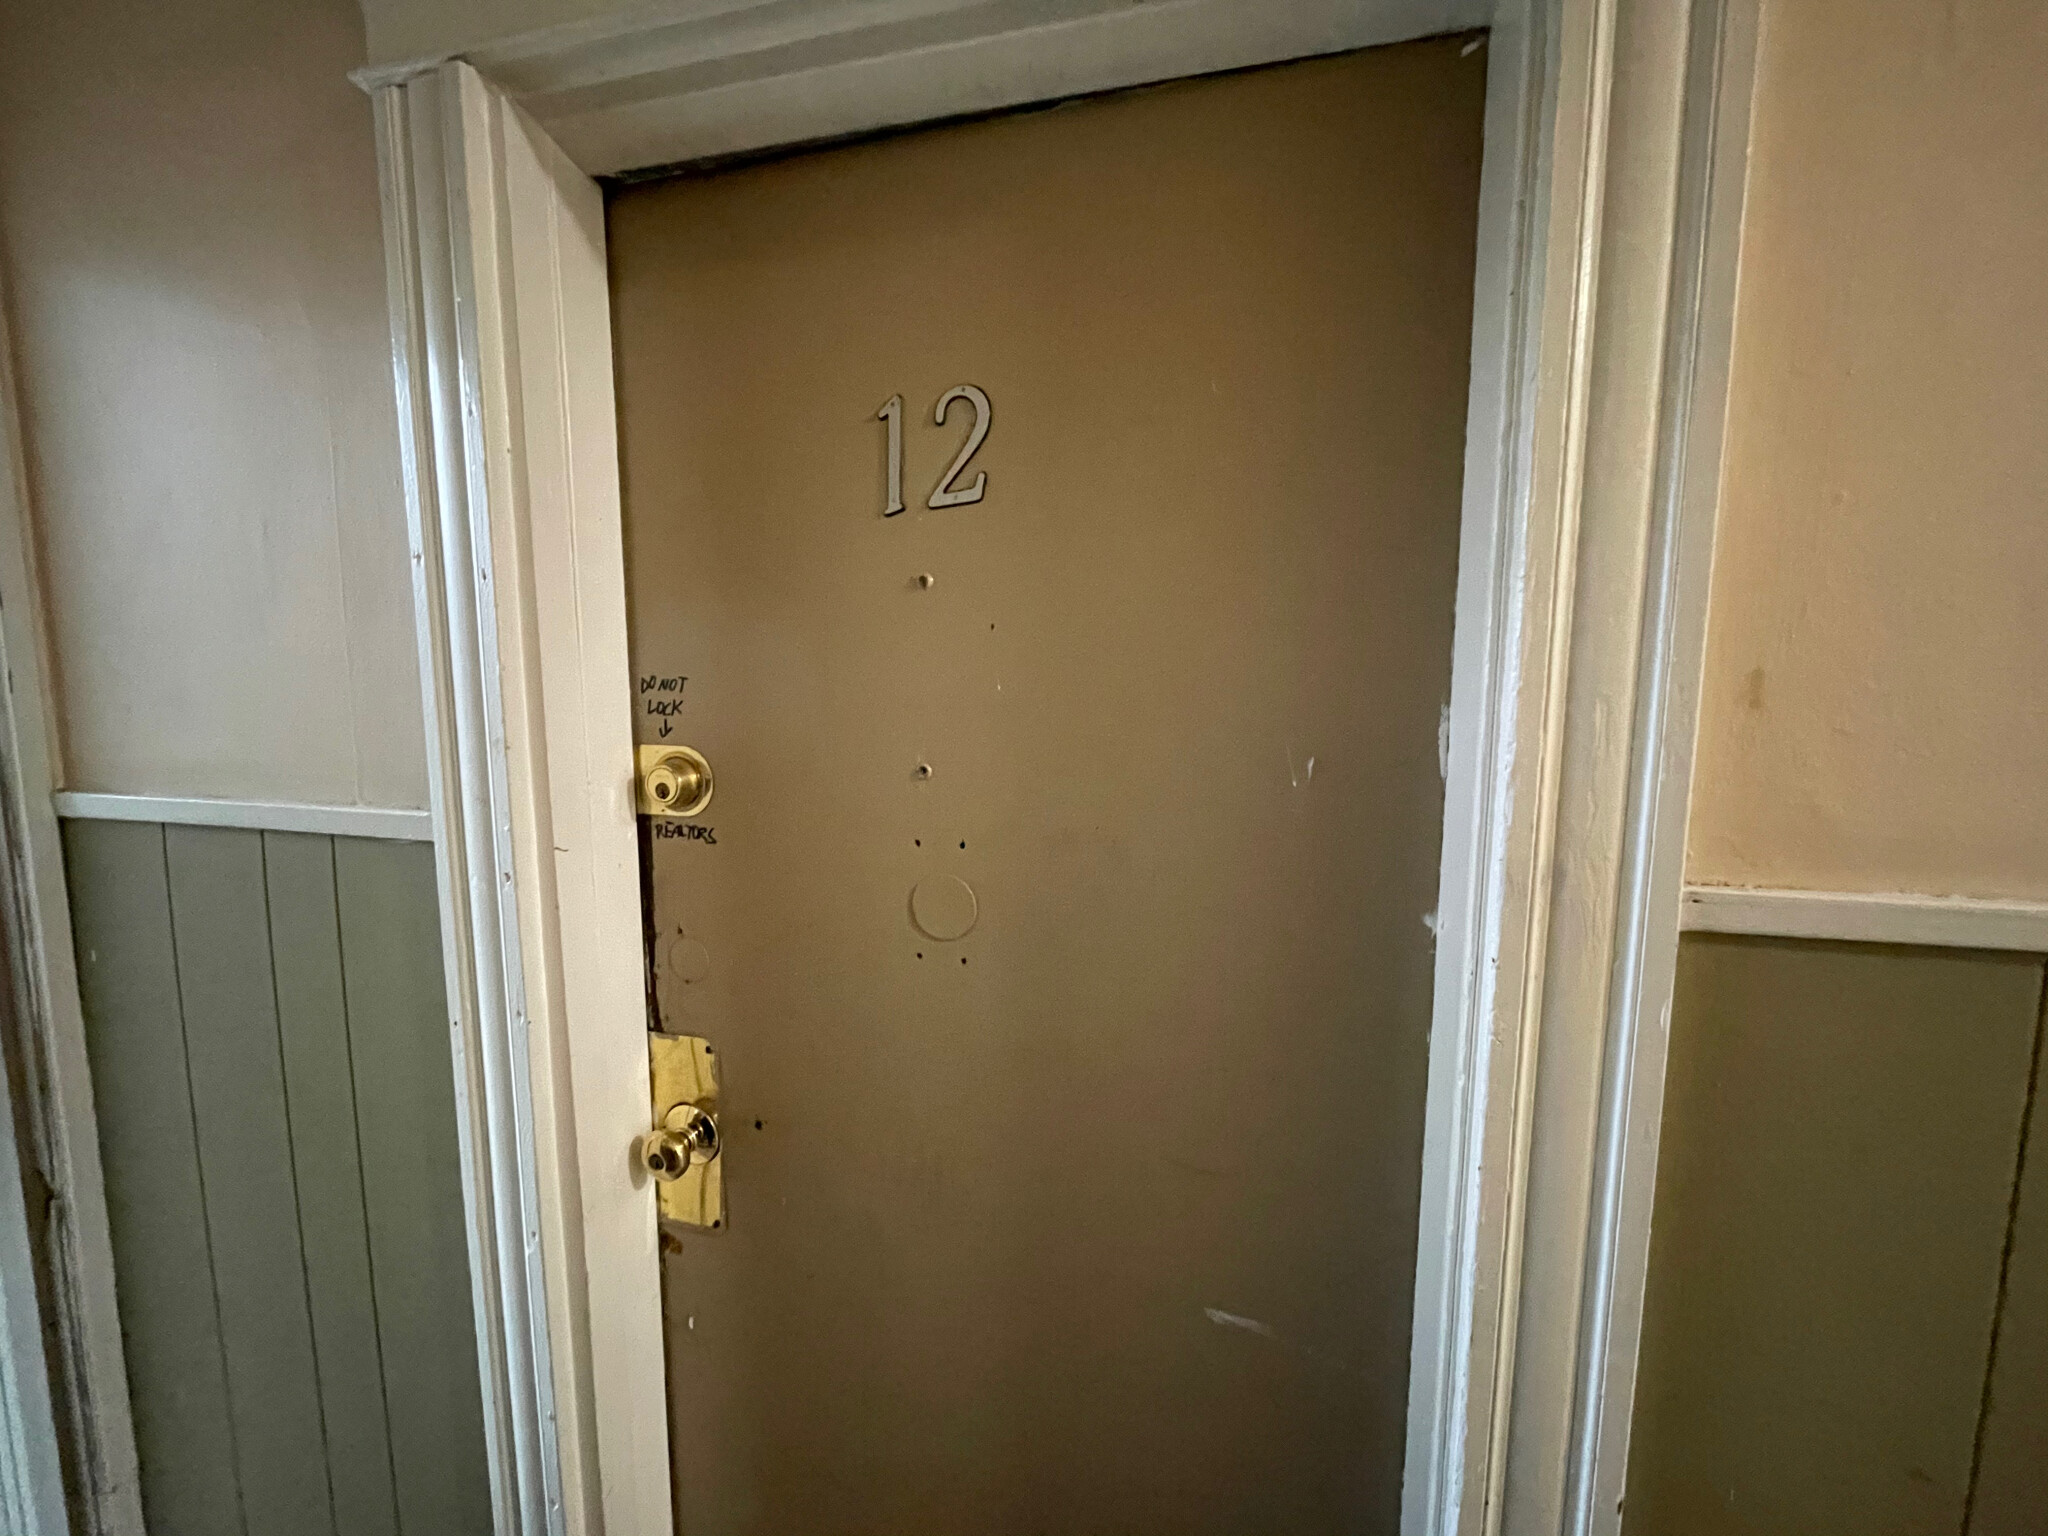 Photos of apartment on Fenwood Rd.,Boston MA 02115